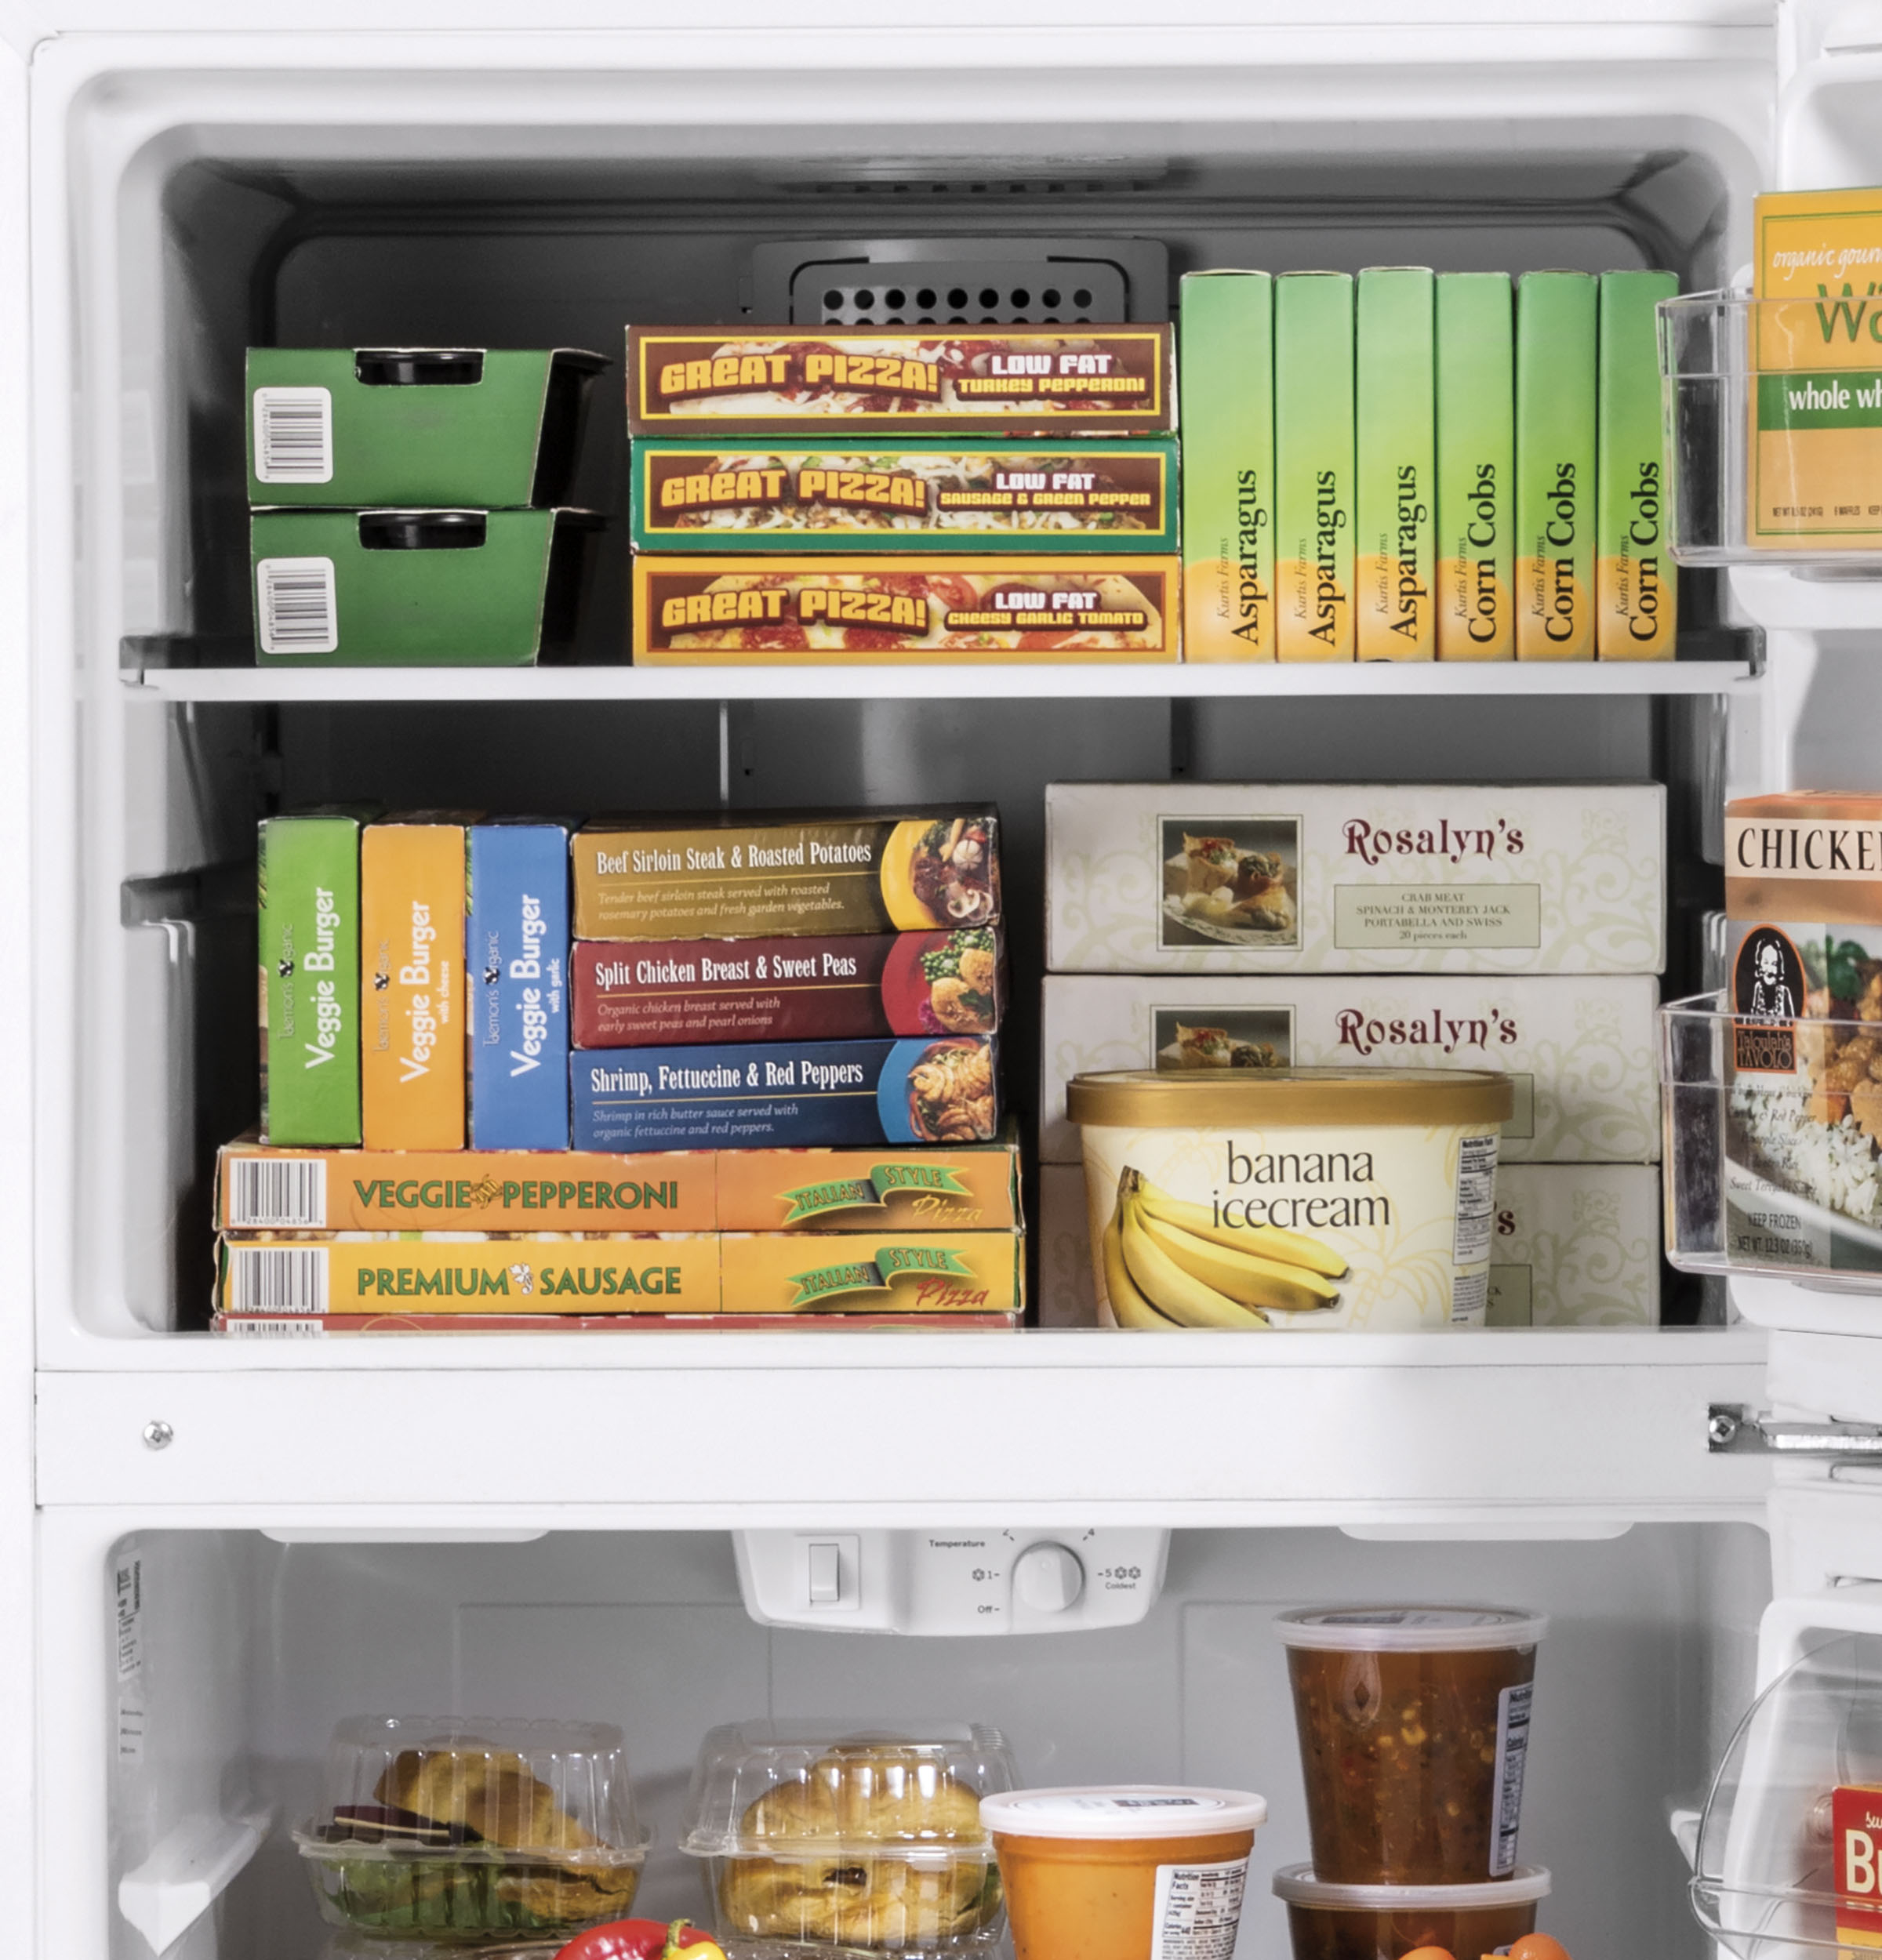 GIE18GCNRSA, GE Appliances, GE® ENERGY STAR® 17.5 Cu. Ft. Top-Freezer  Refrigerator